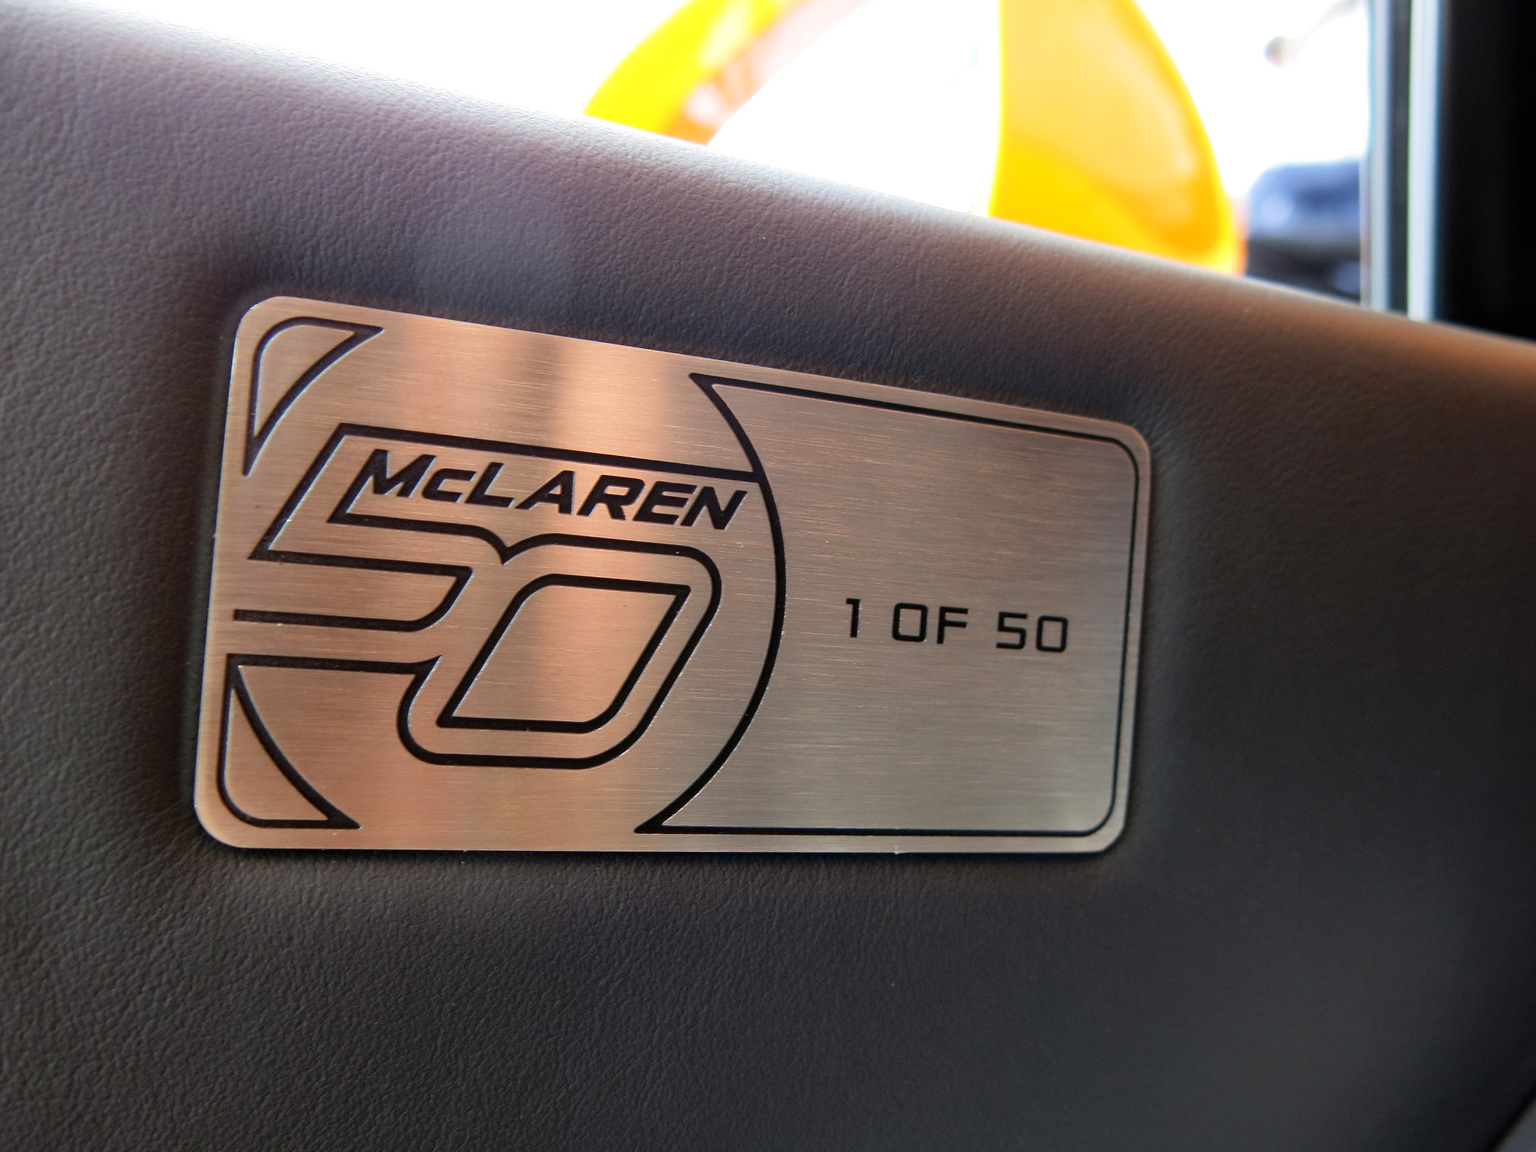 2013 McLaren 50 MP4-12C Spider Gallery